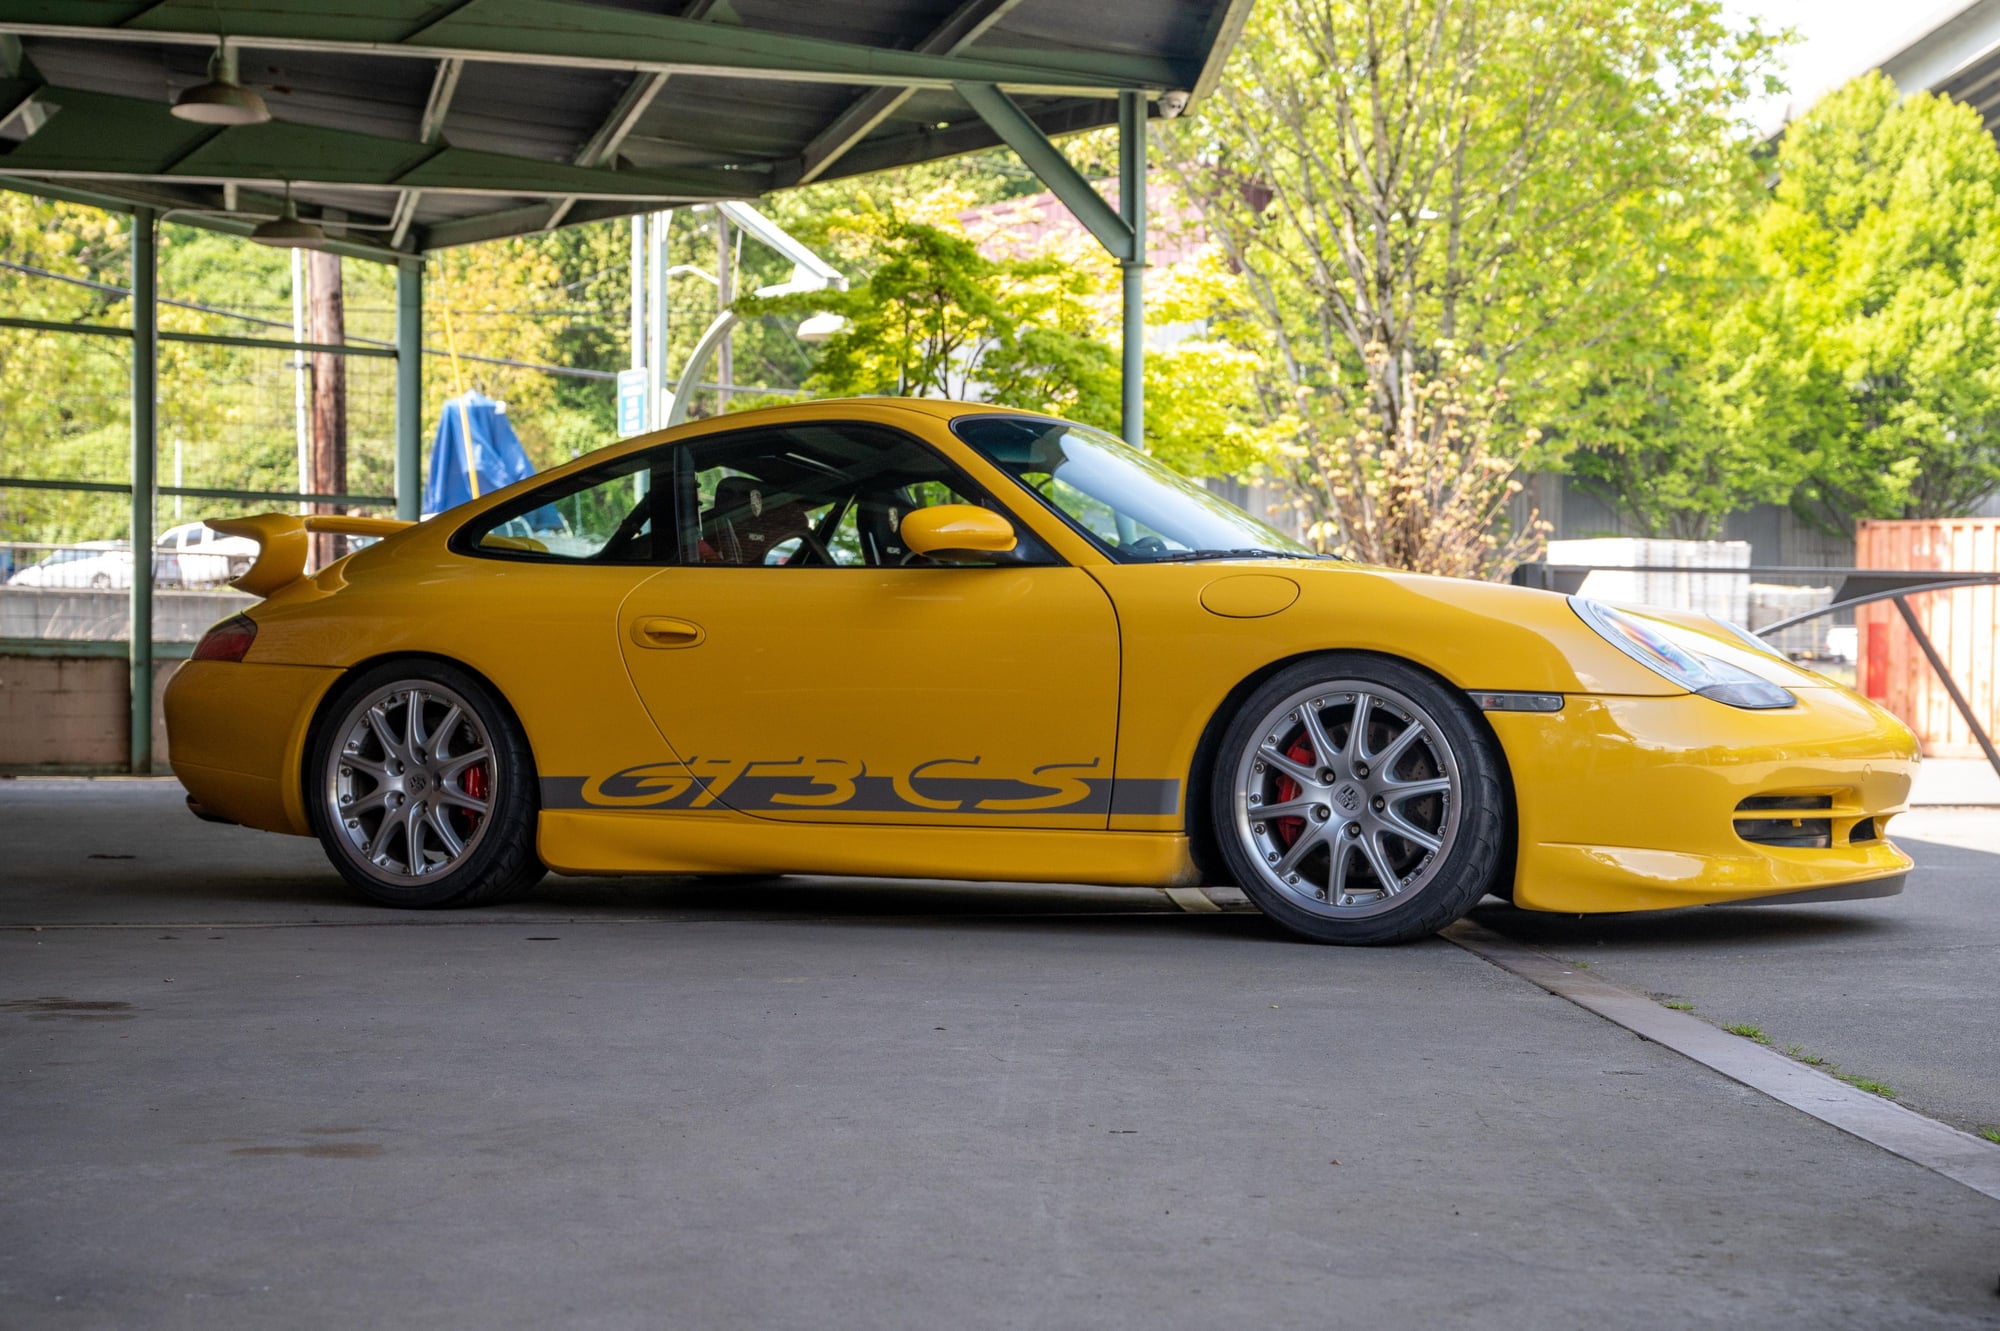 2000 Porsche GT3 - 2000 Porsche GT3 Clubsport - RoW 996.1 GT3 in USA (track use) - Used - Mercer Island, WA 98040, United States